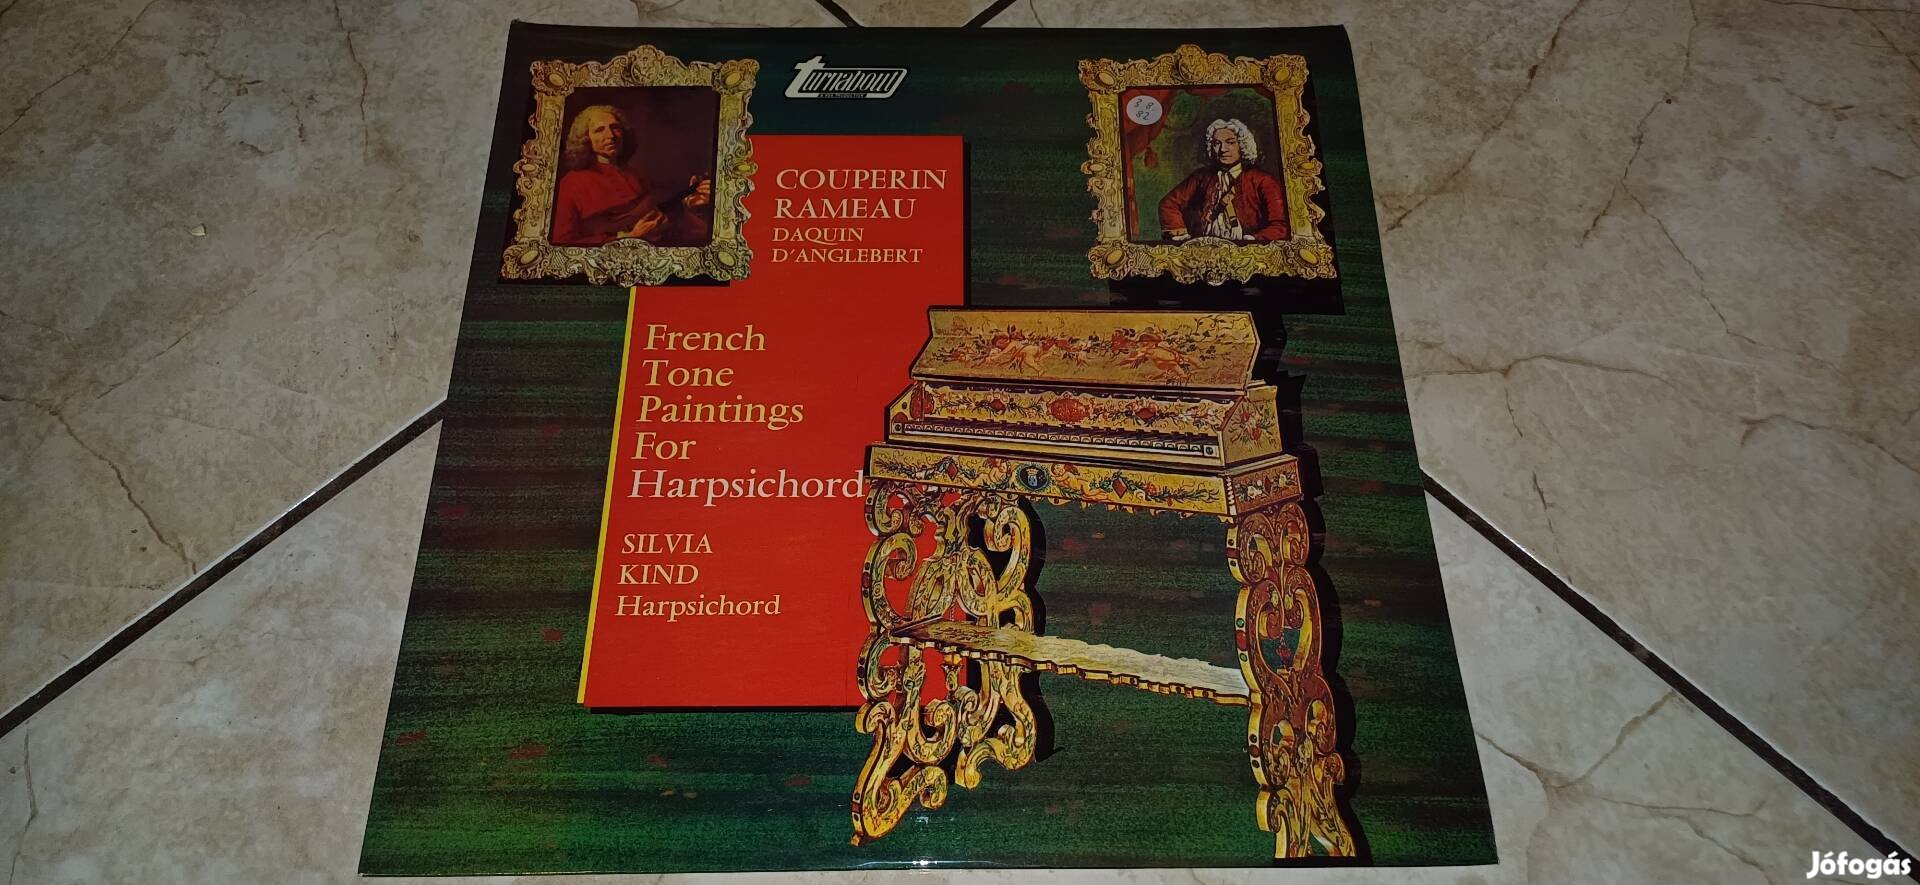 Couperin Rameau bakelit lemez